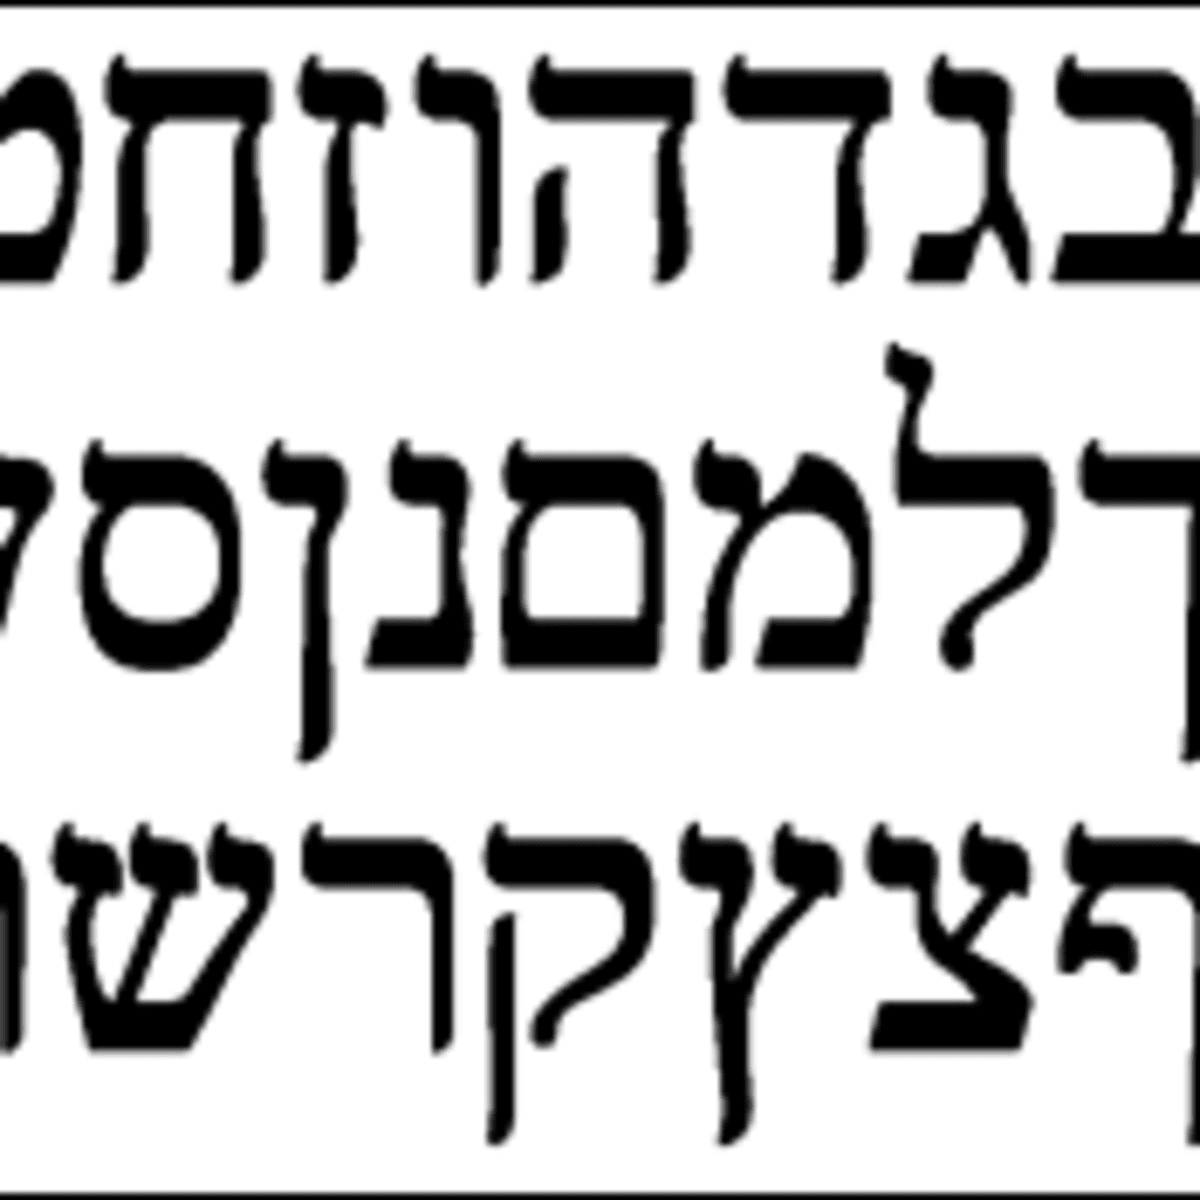 How to Write the Hebrew Alphabet. - Owlcation